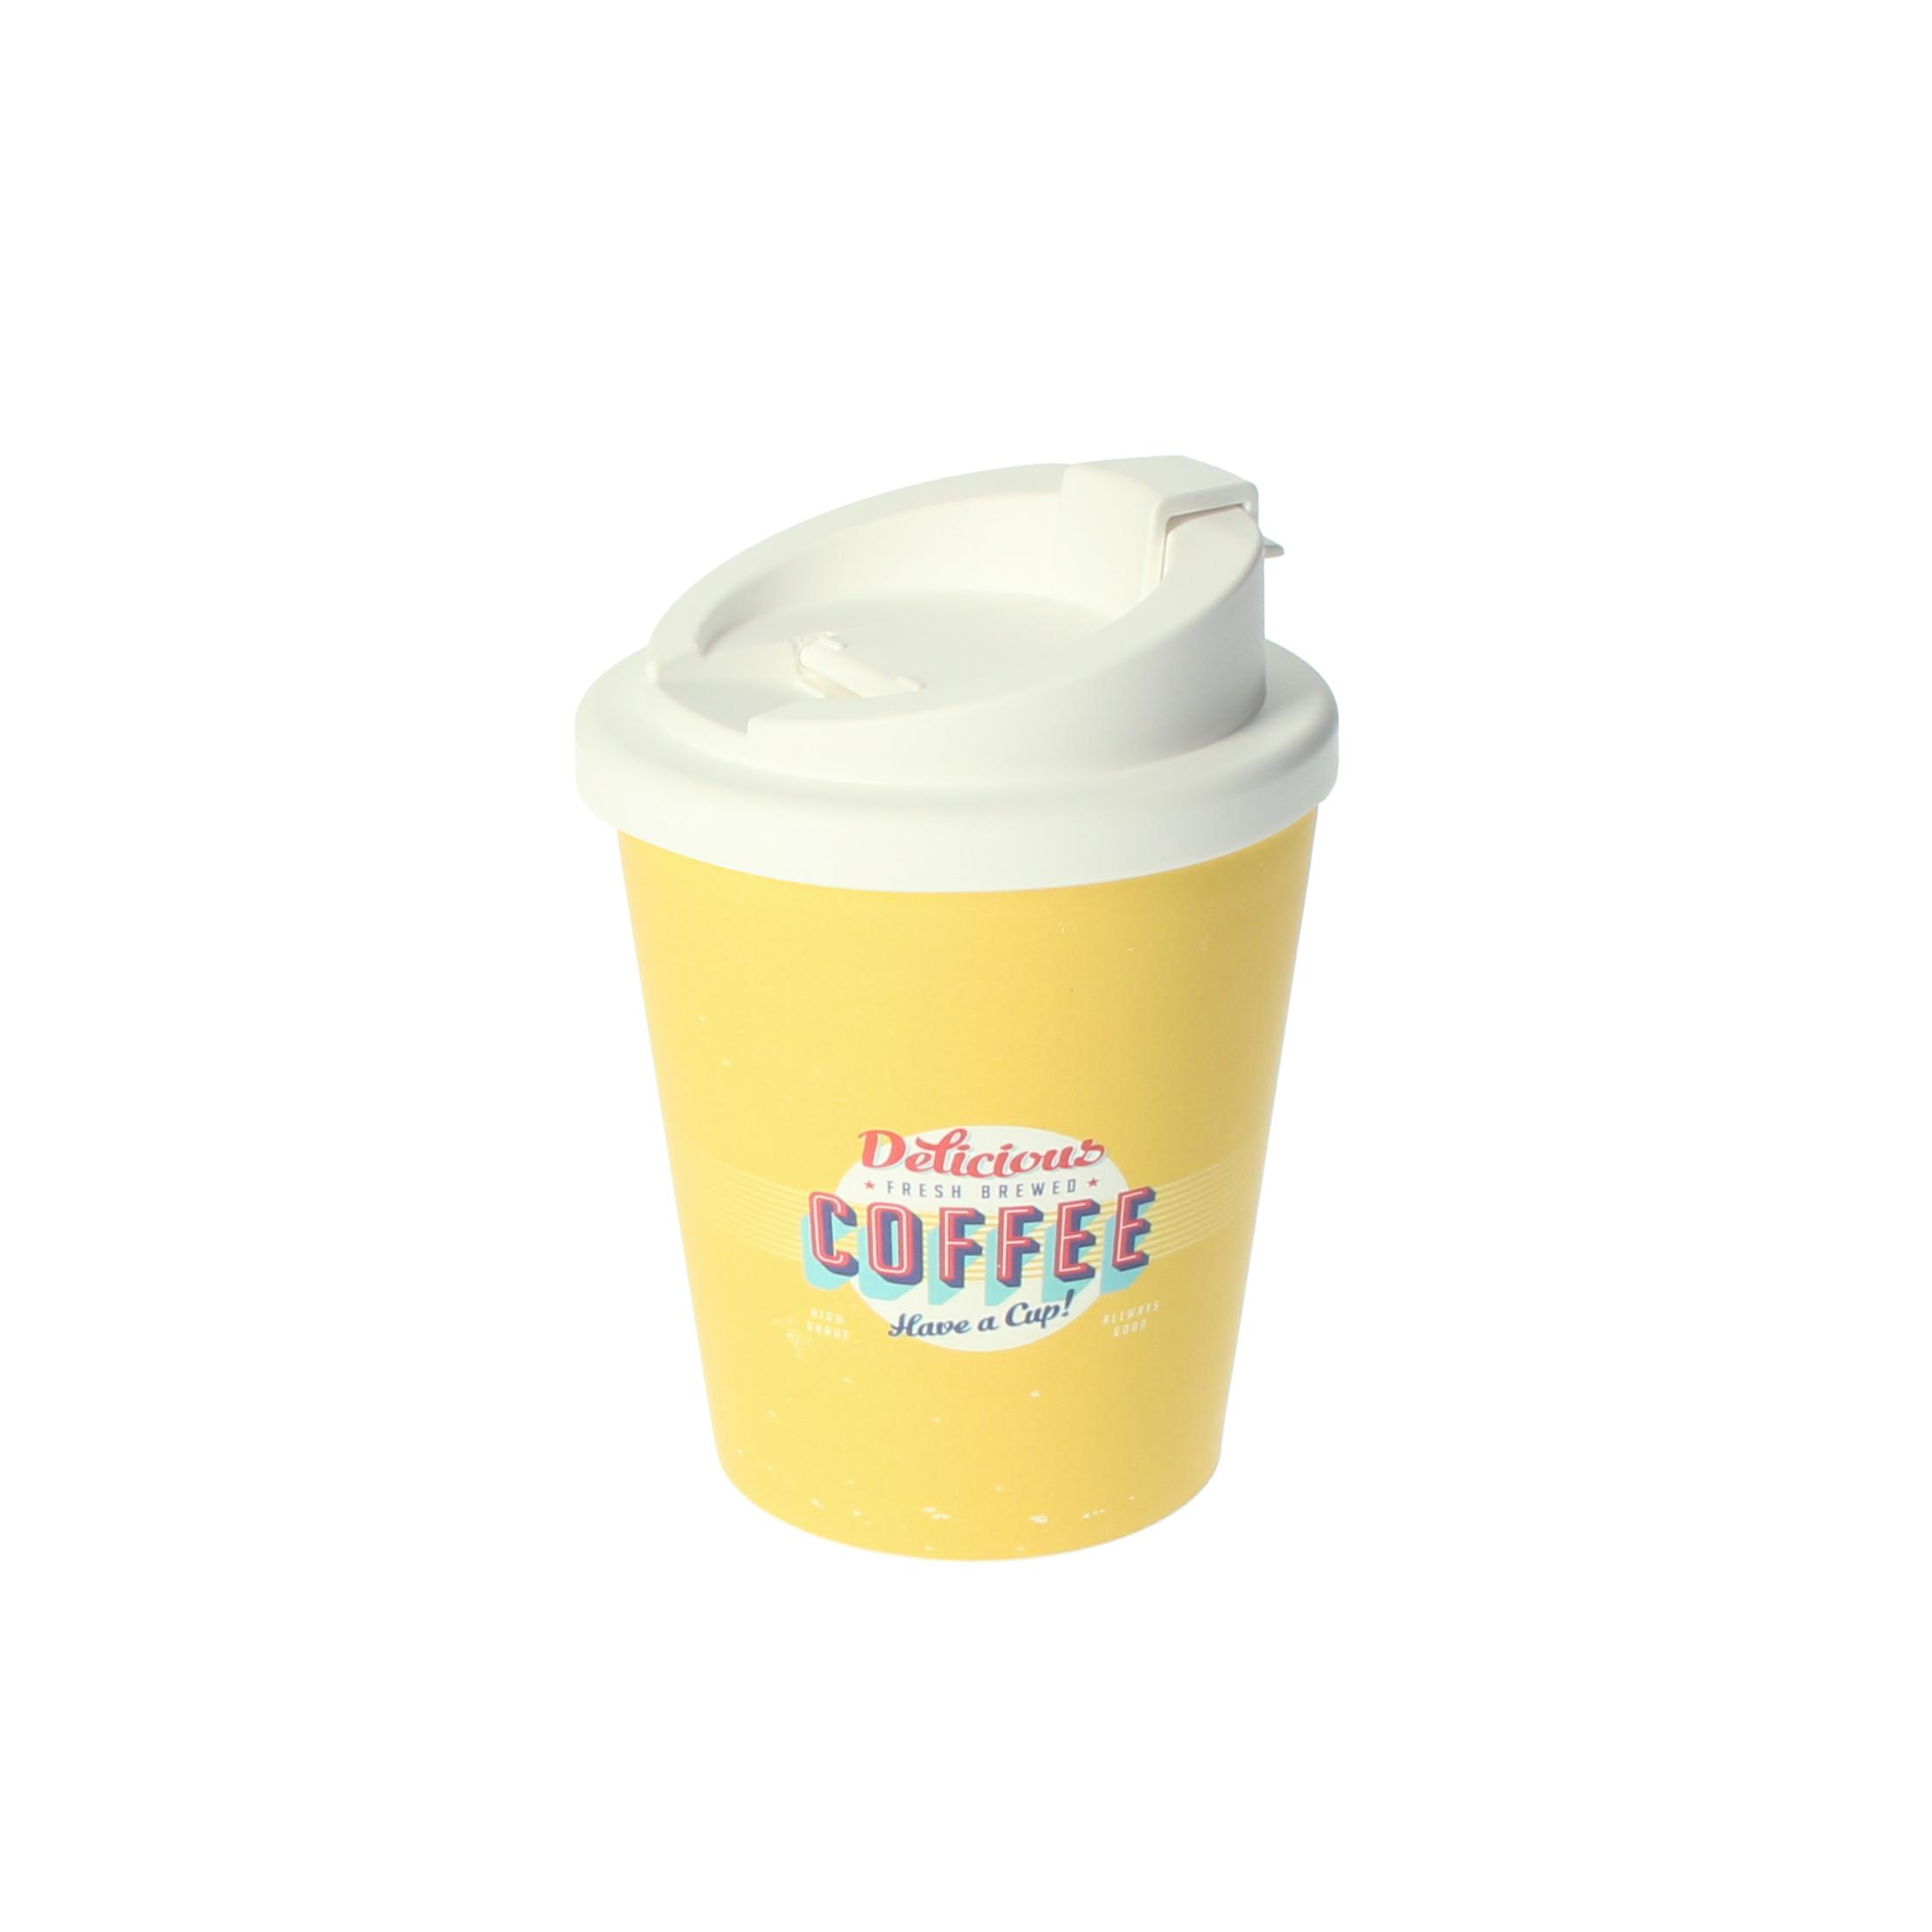 Kaffeebecher Premium Deluxe small